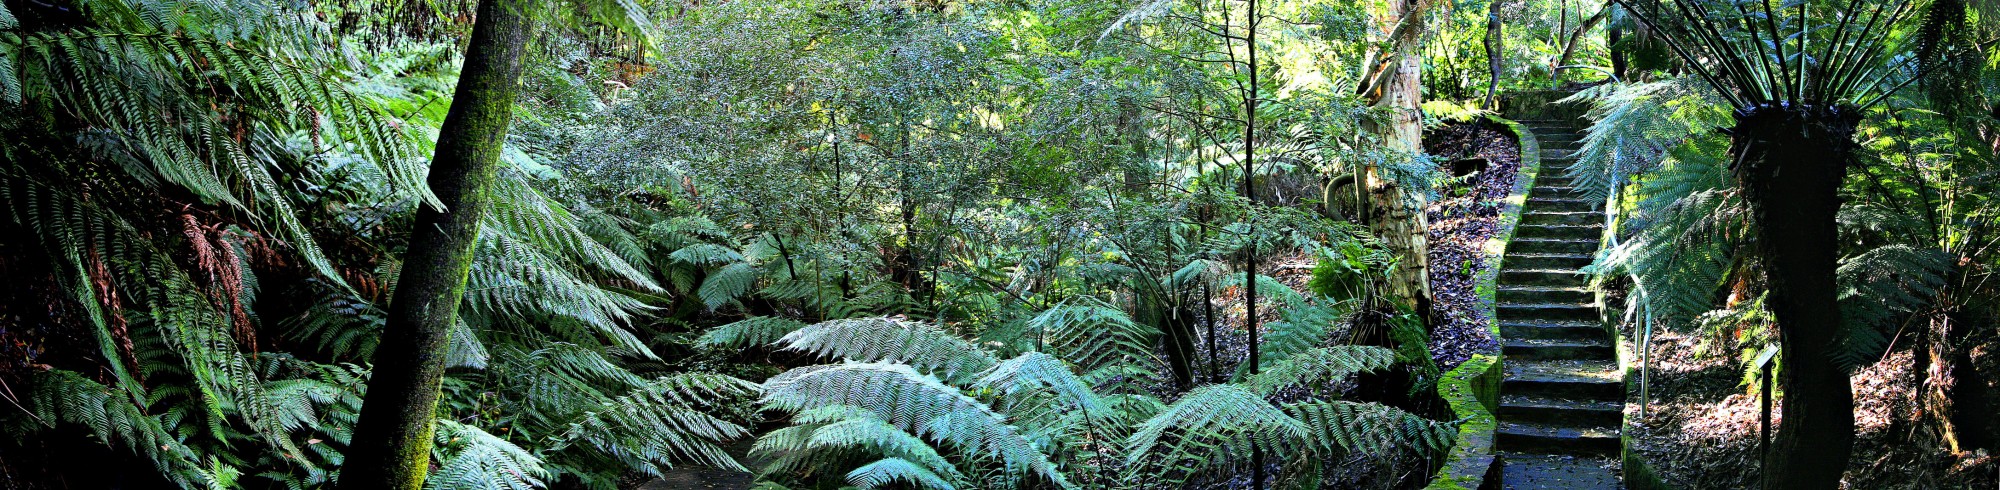 Rainforest walk national botanical gardens